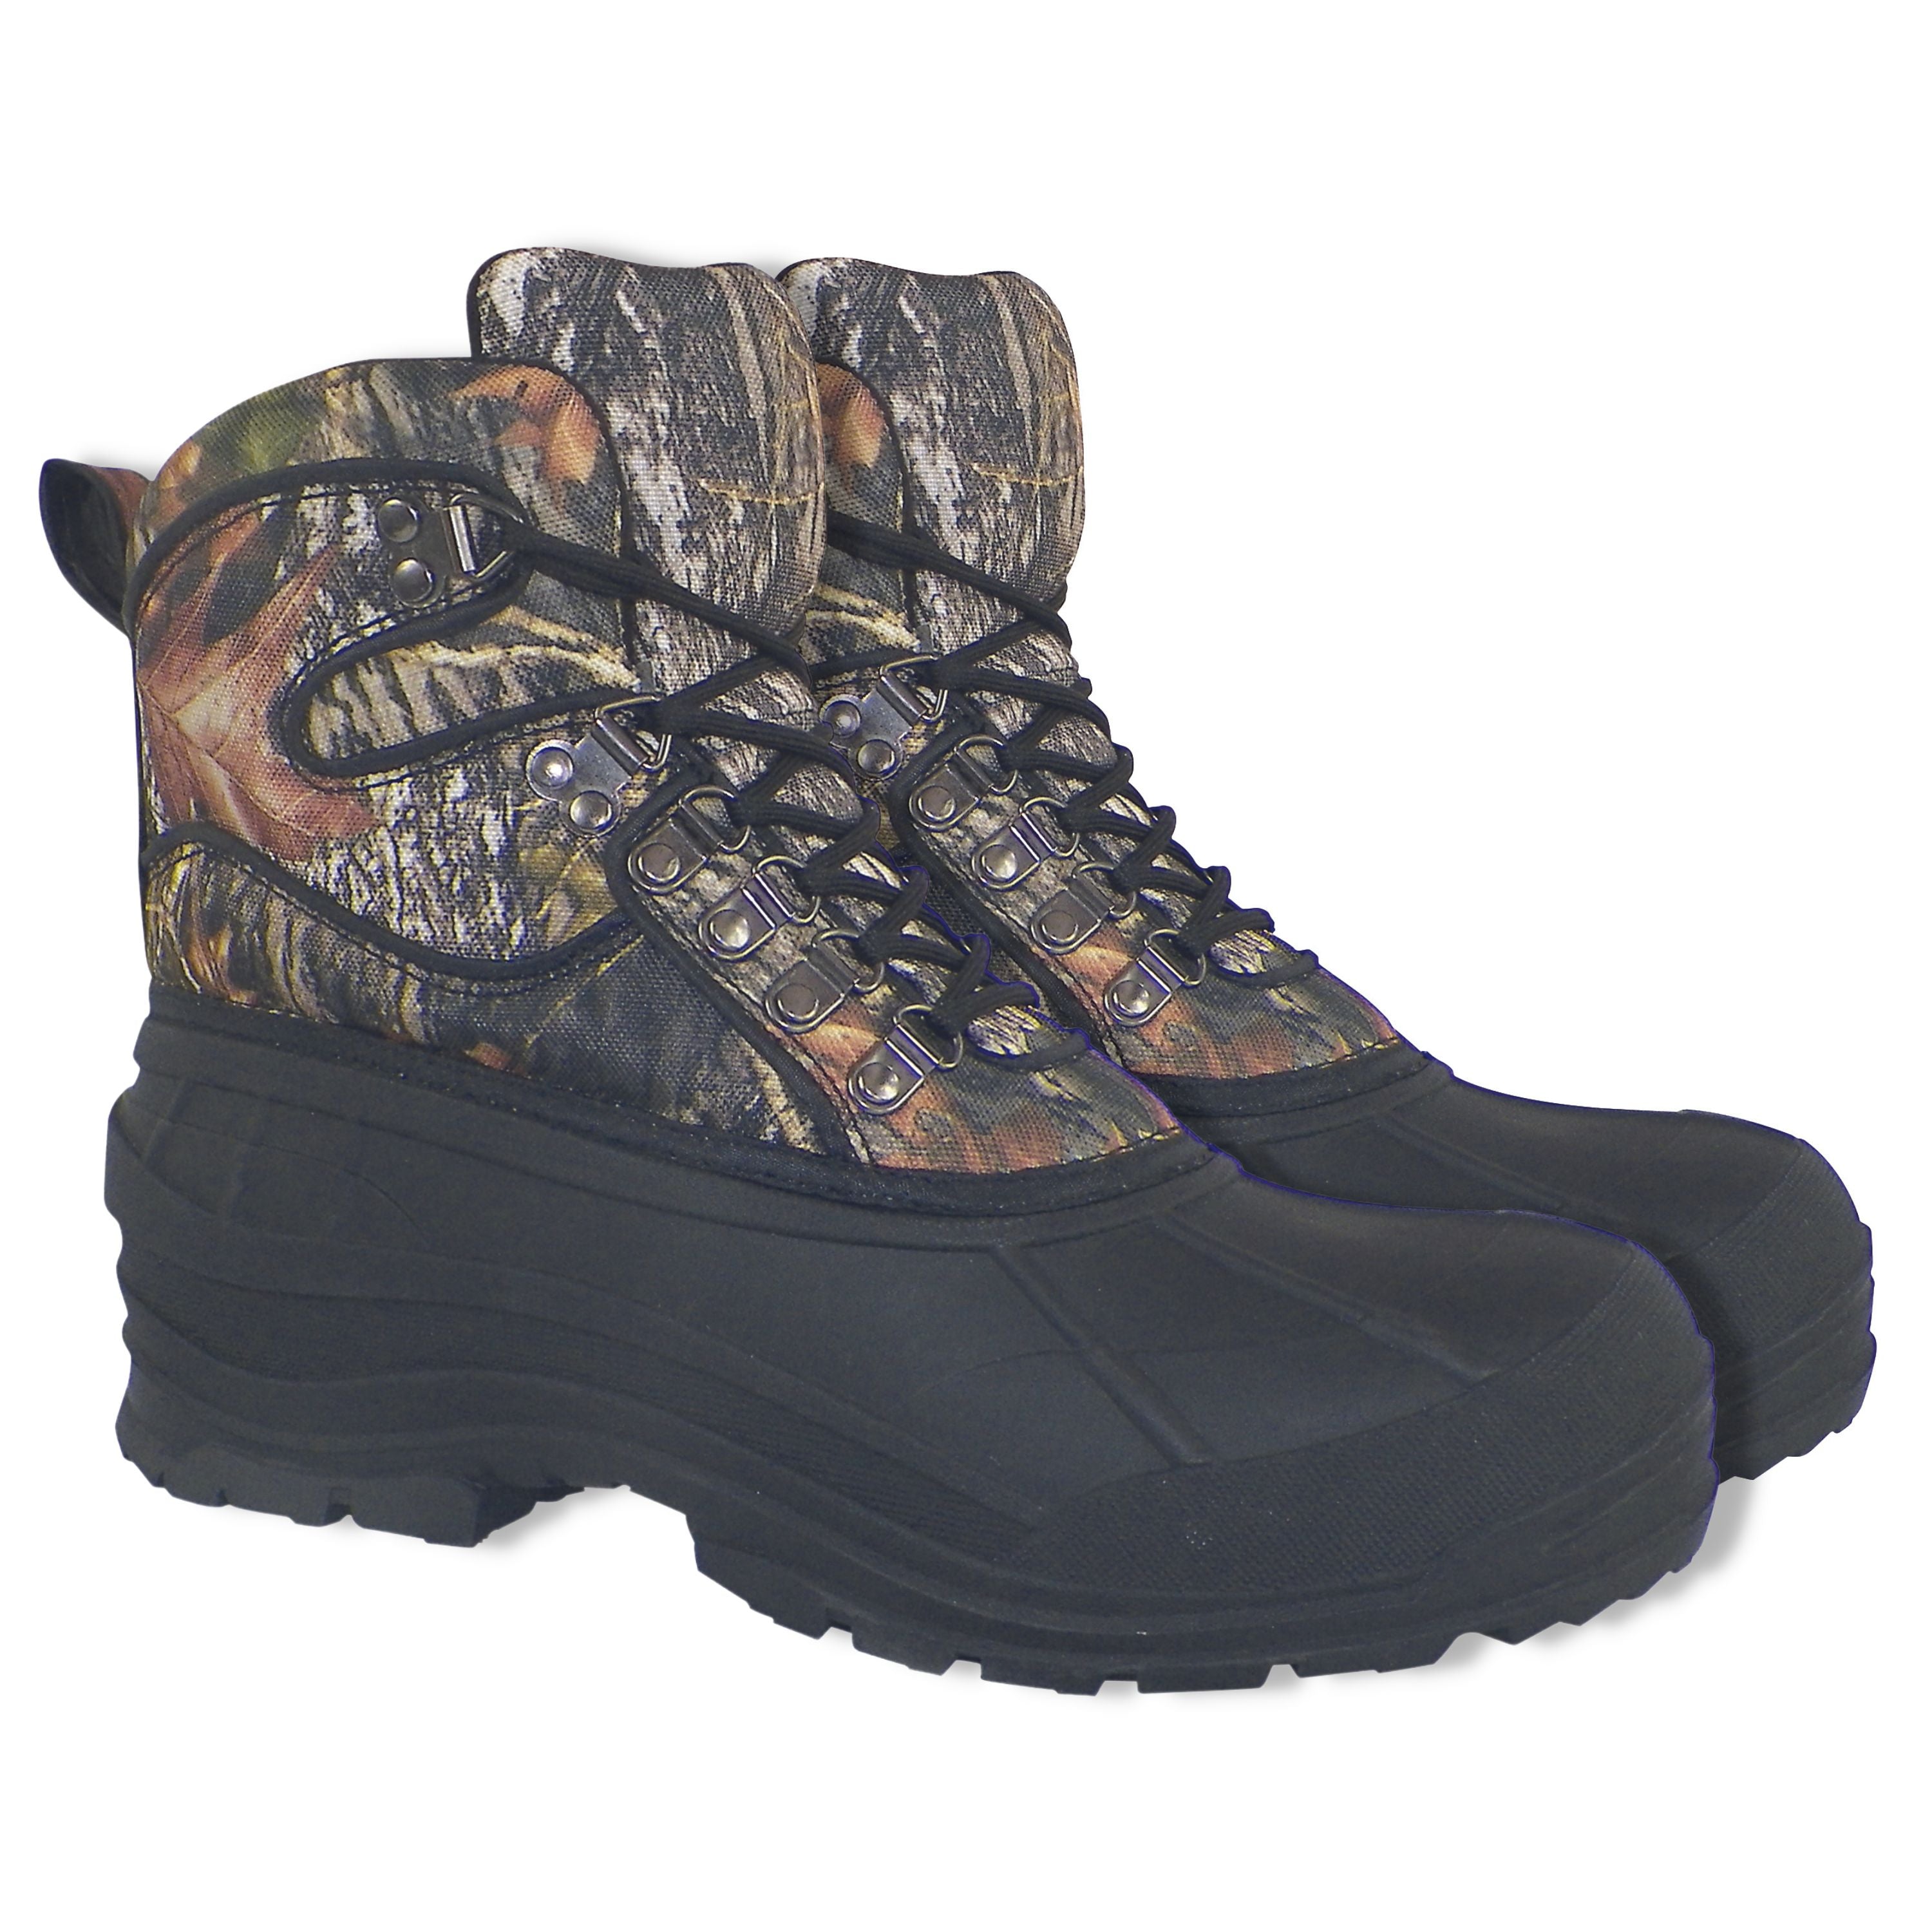 Bottes camouflage - Homme||Camo boots - Men's